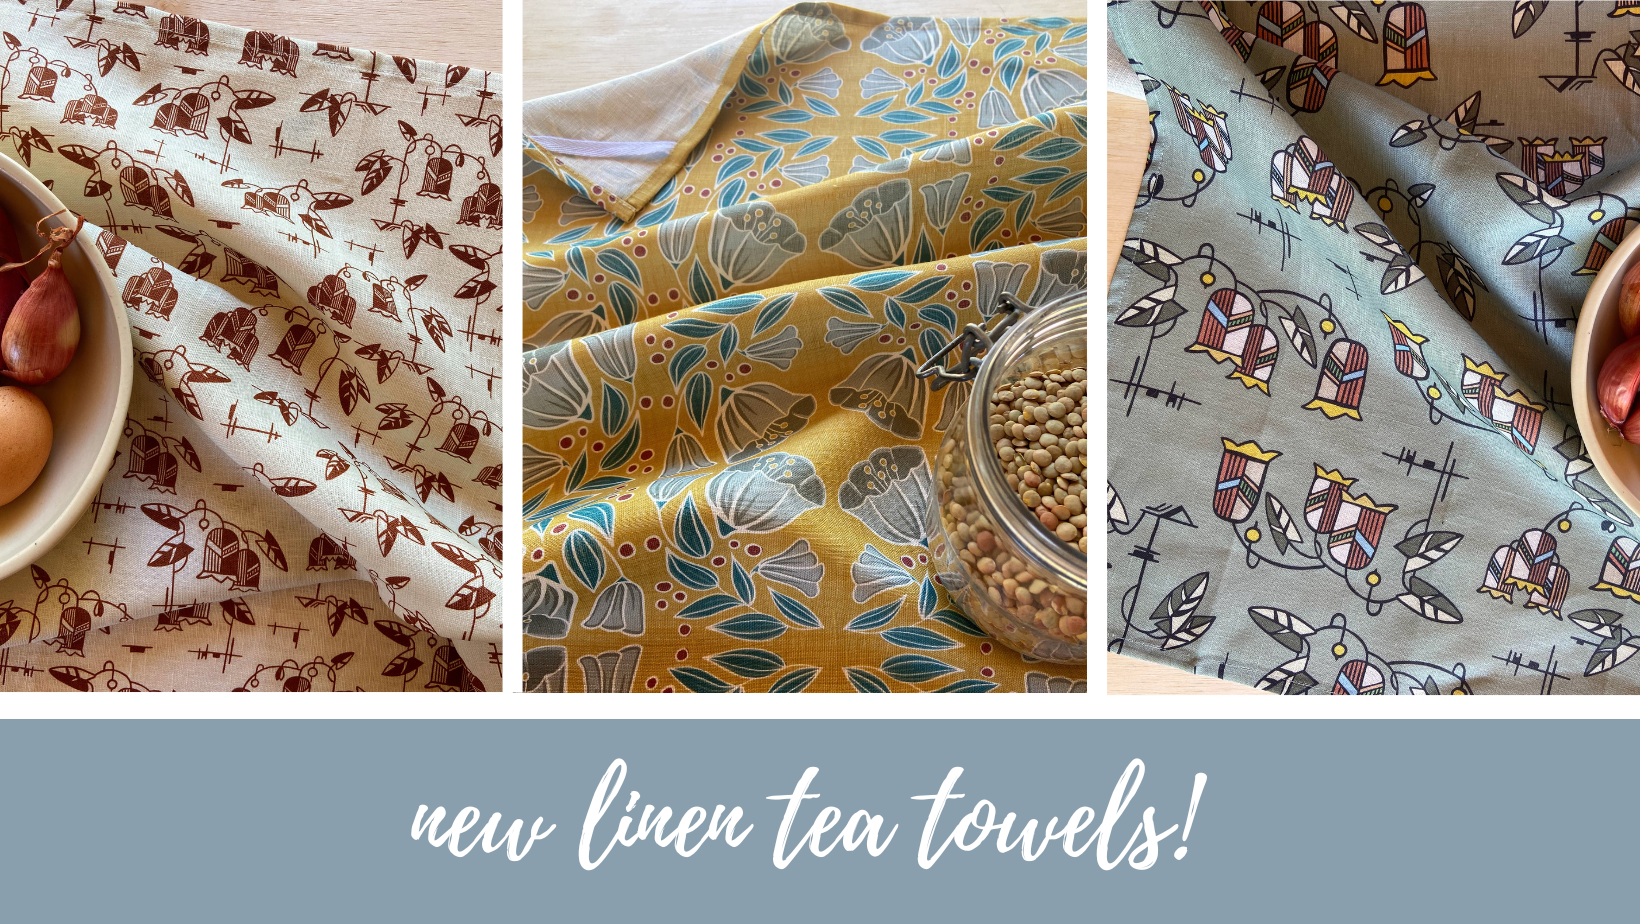 Brand New Linen Towels!